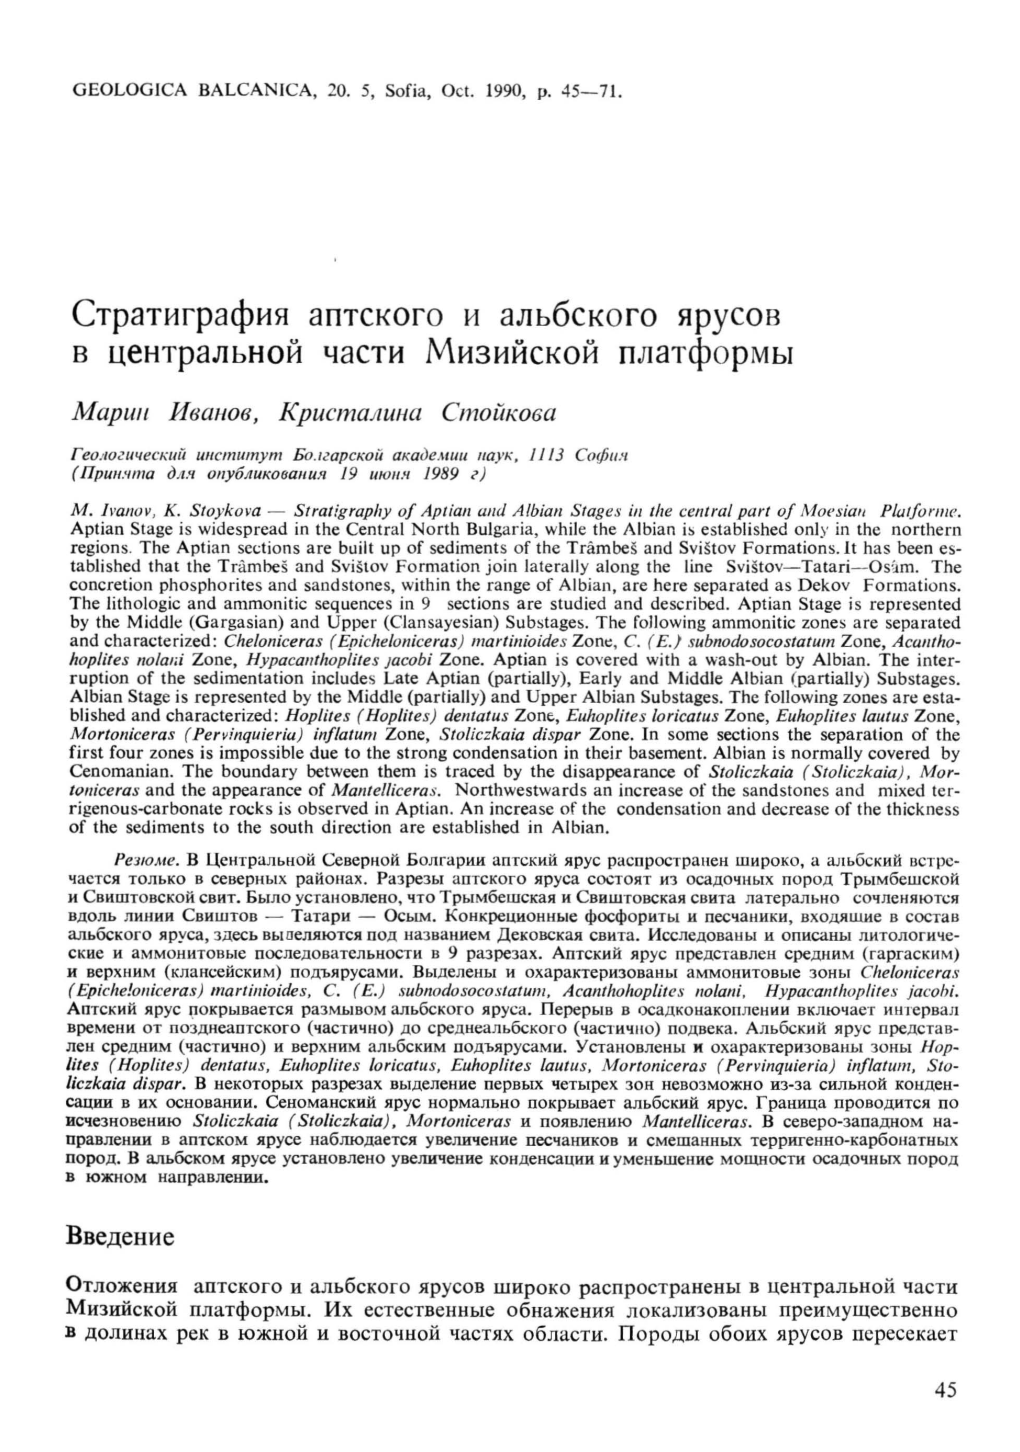 GB (1990) 20 (5) Pp. 45-77 (Ivanov and Stoykova).Pdf